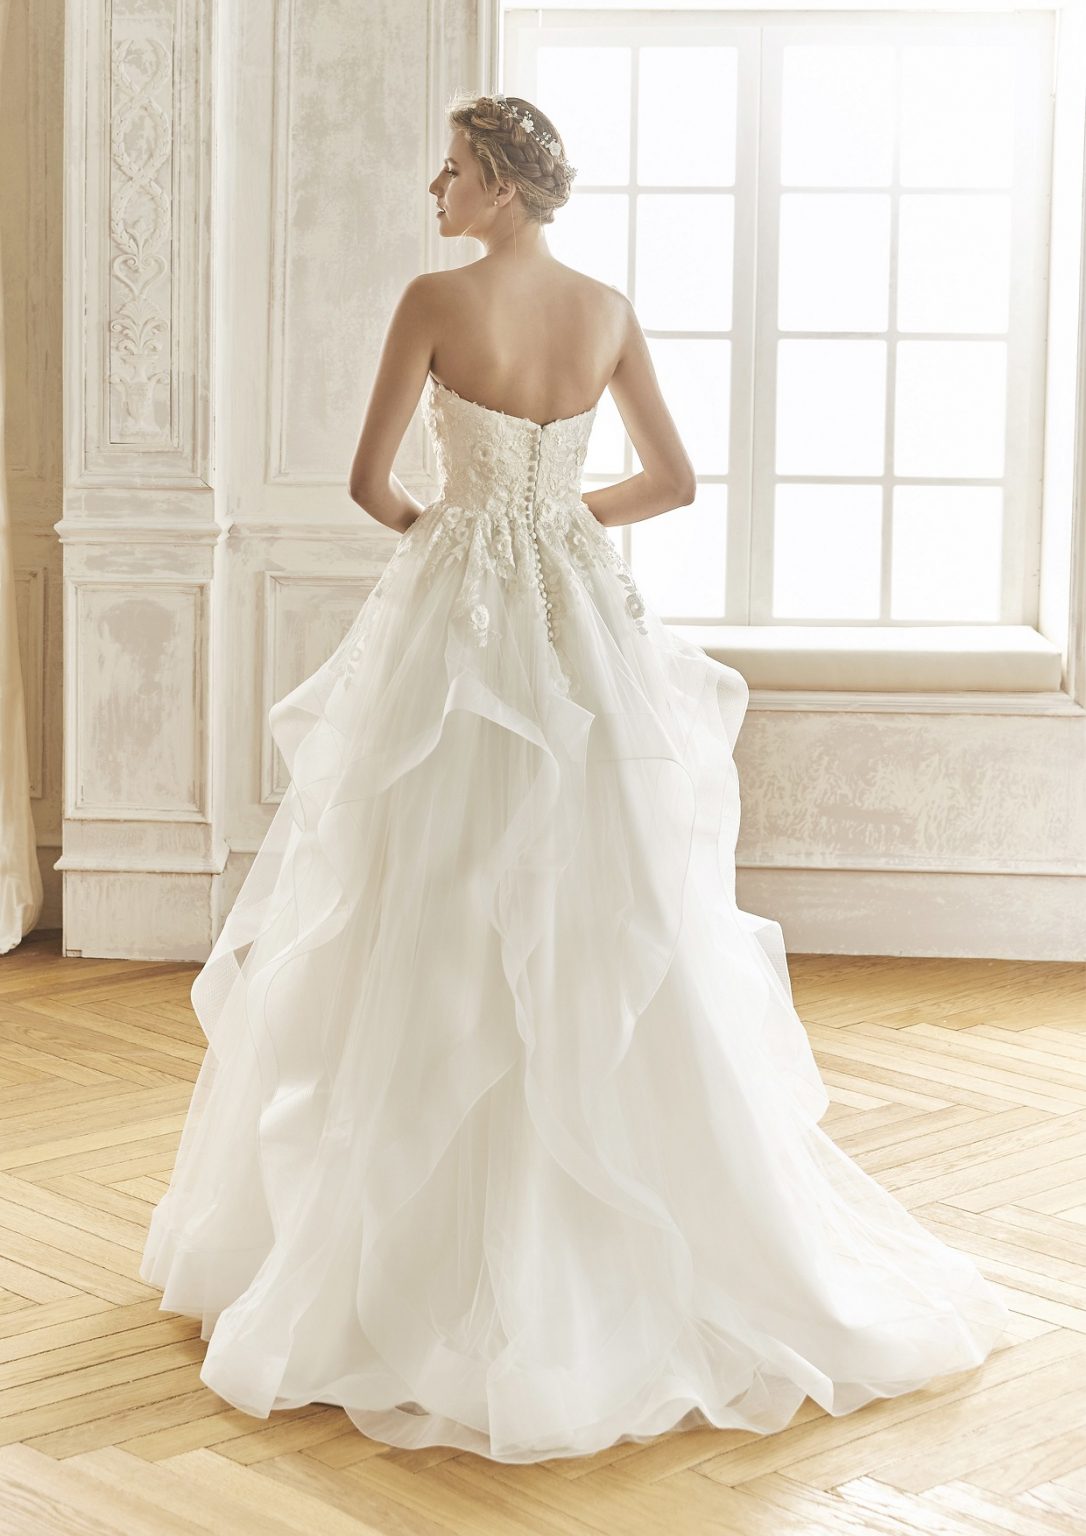 Romantic Gown With Sweatheart Neckline Modes Bridal Nz 